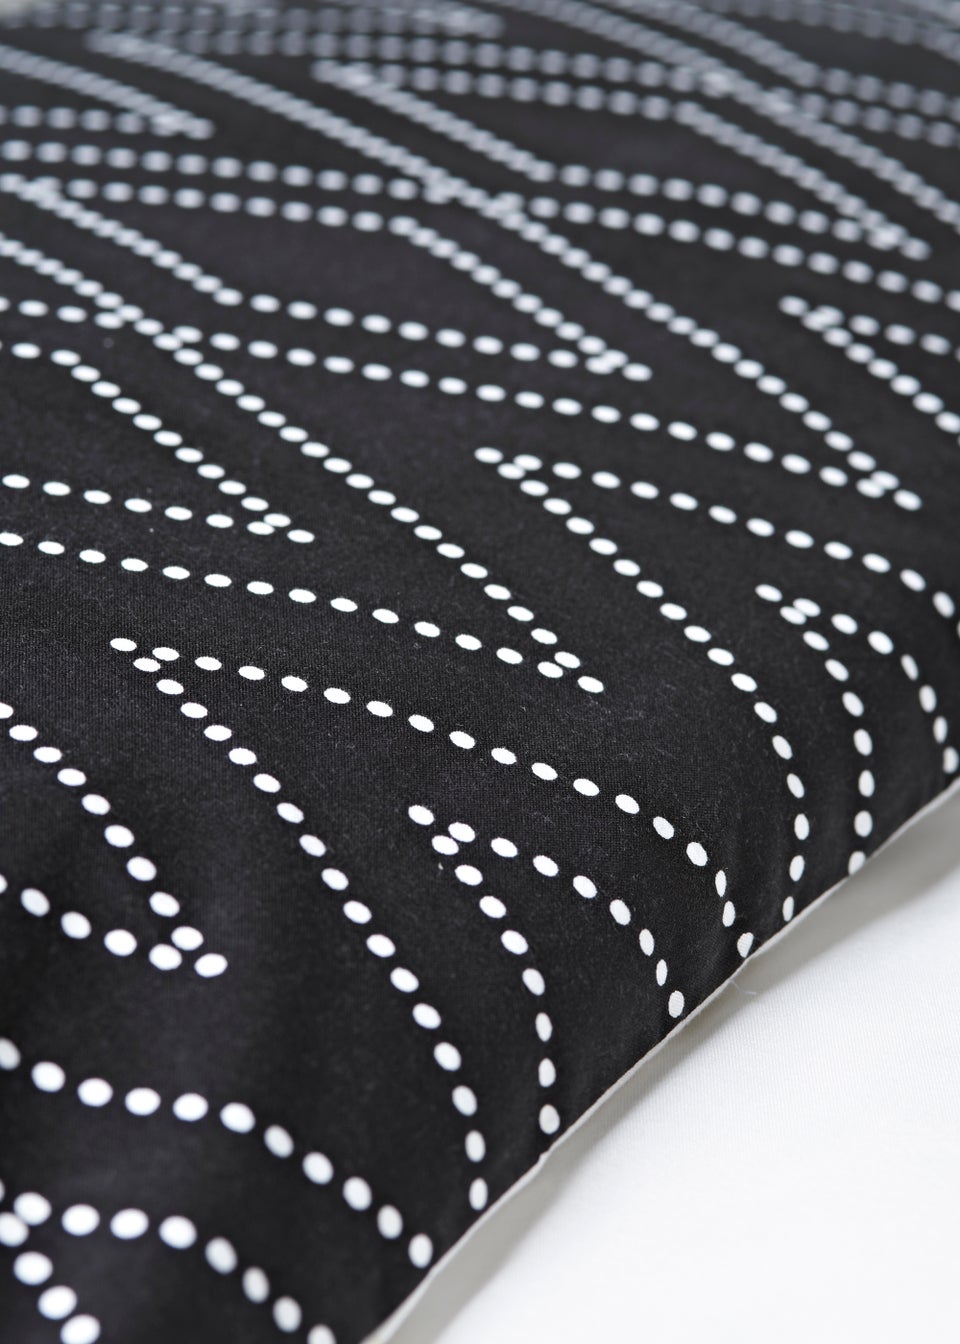 Black & White Zebra Print Reversible Duvet Set